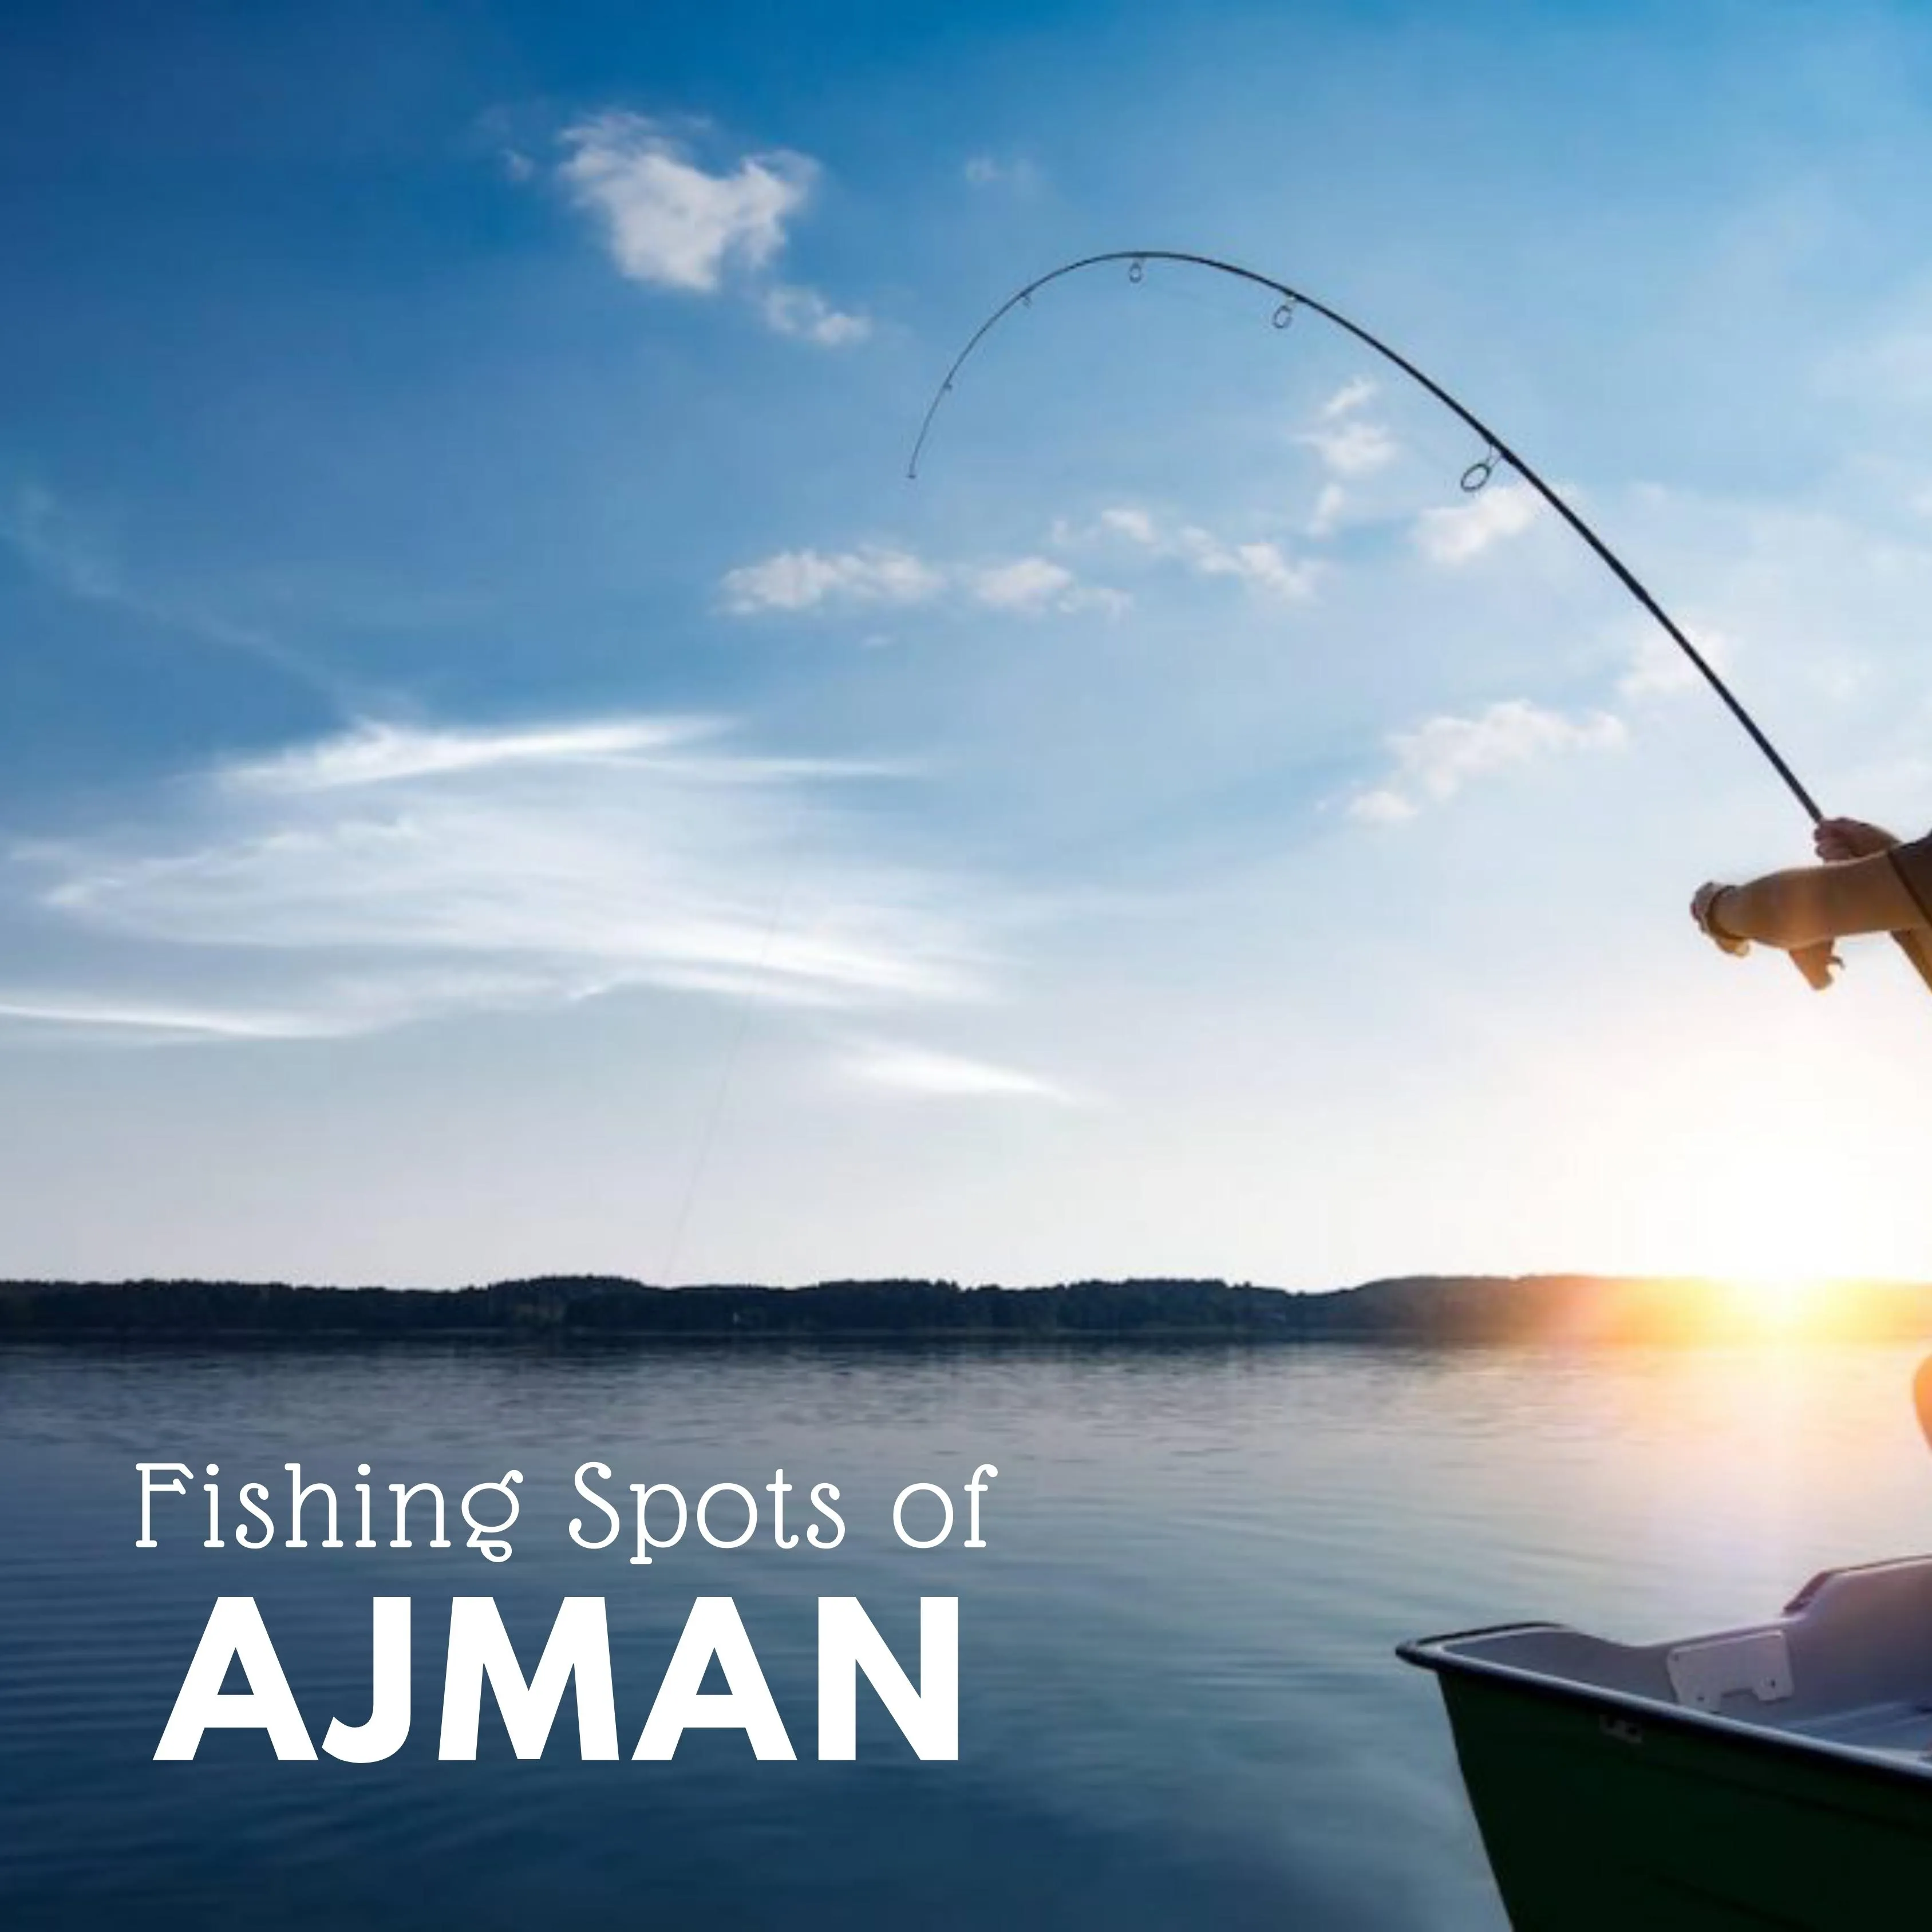 FISHING SPOT OF AJMAN